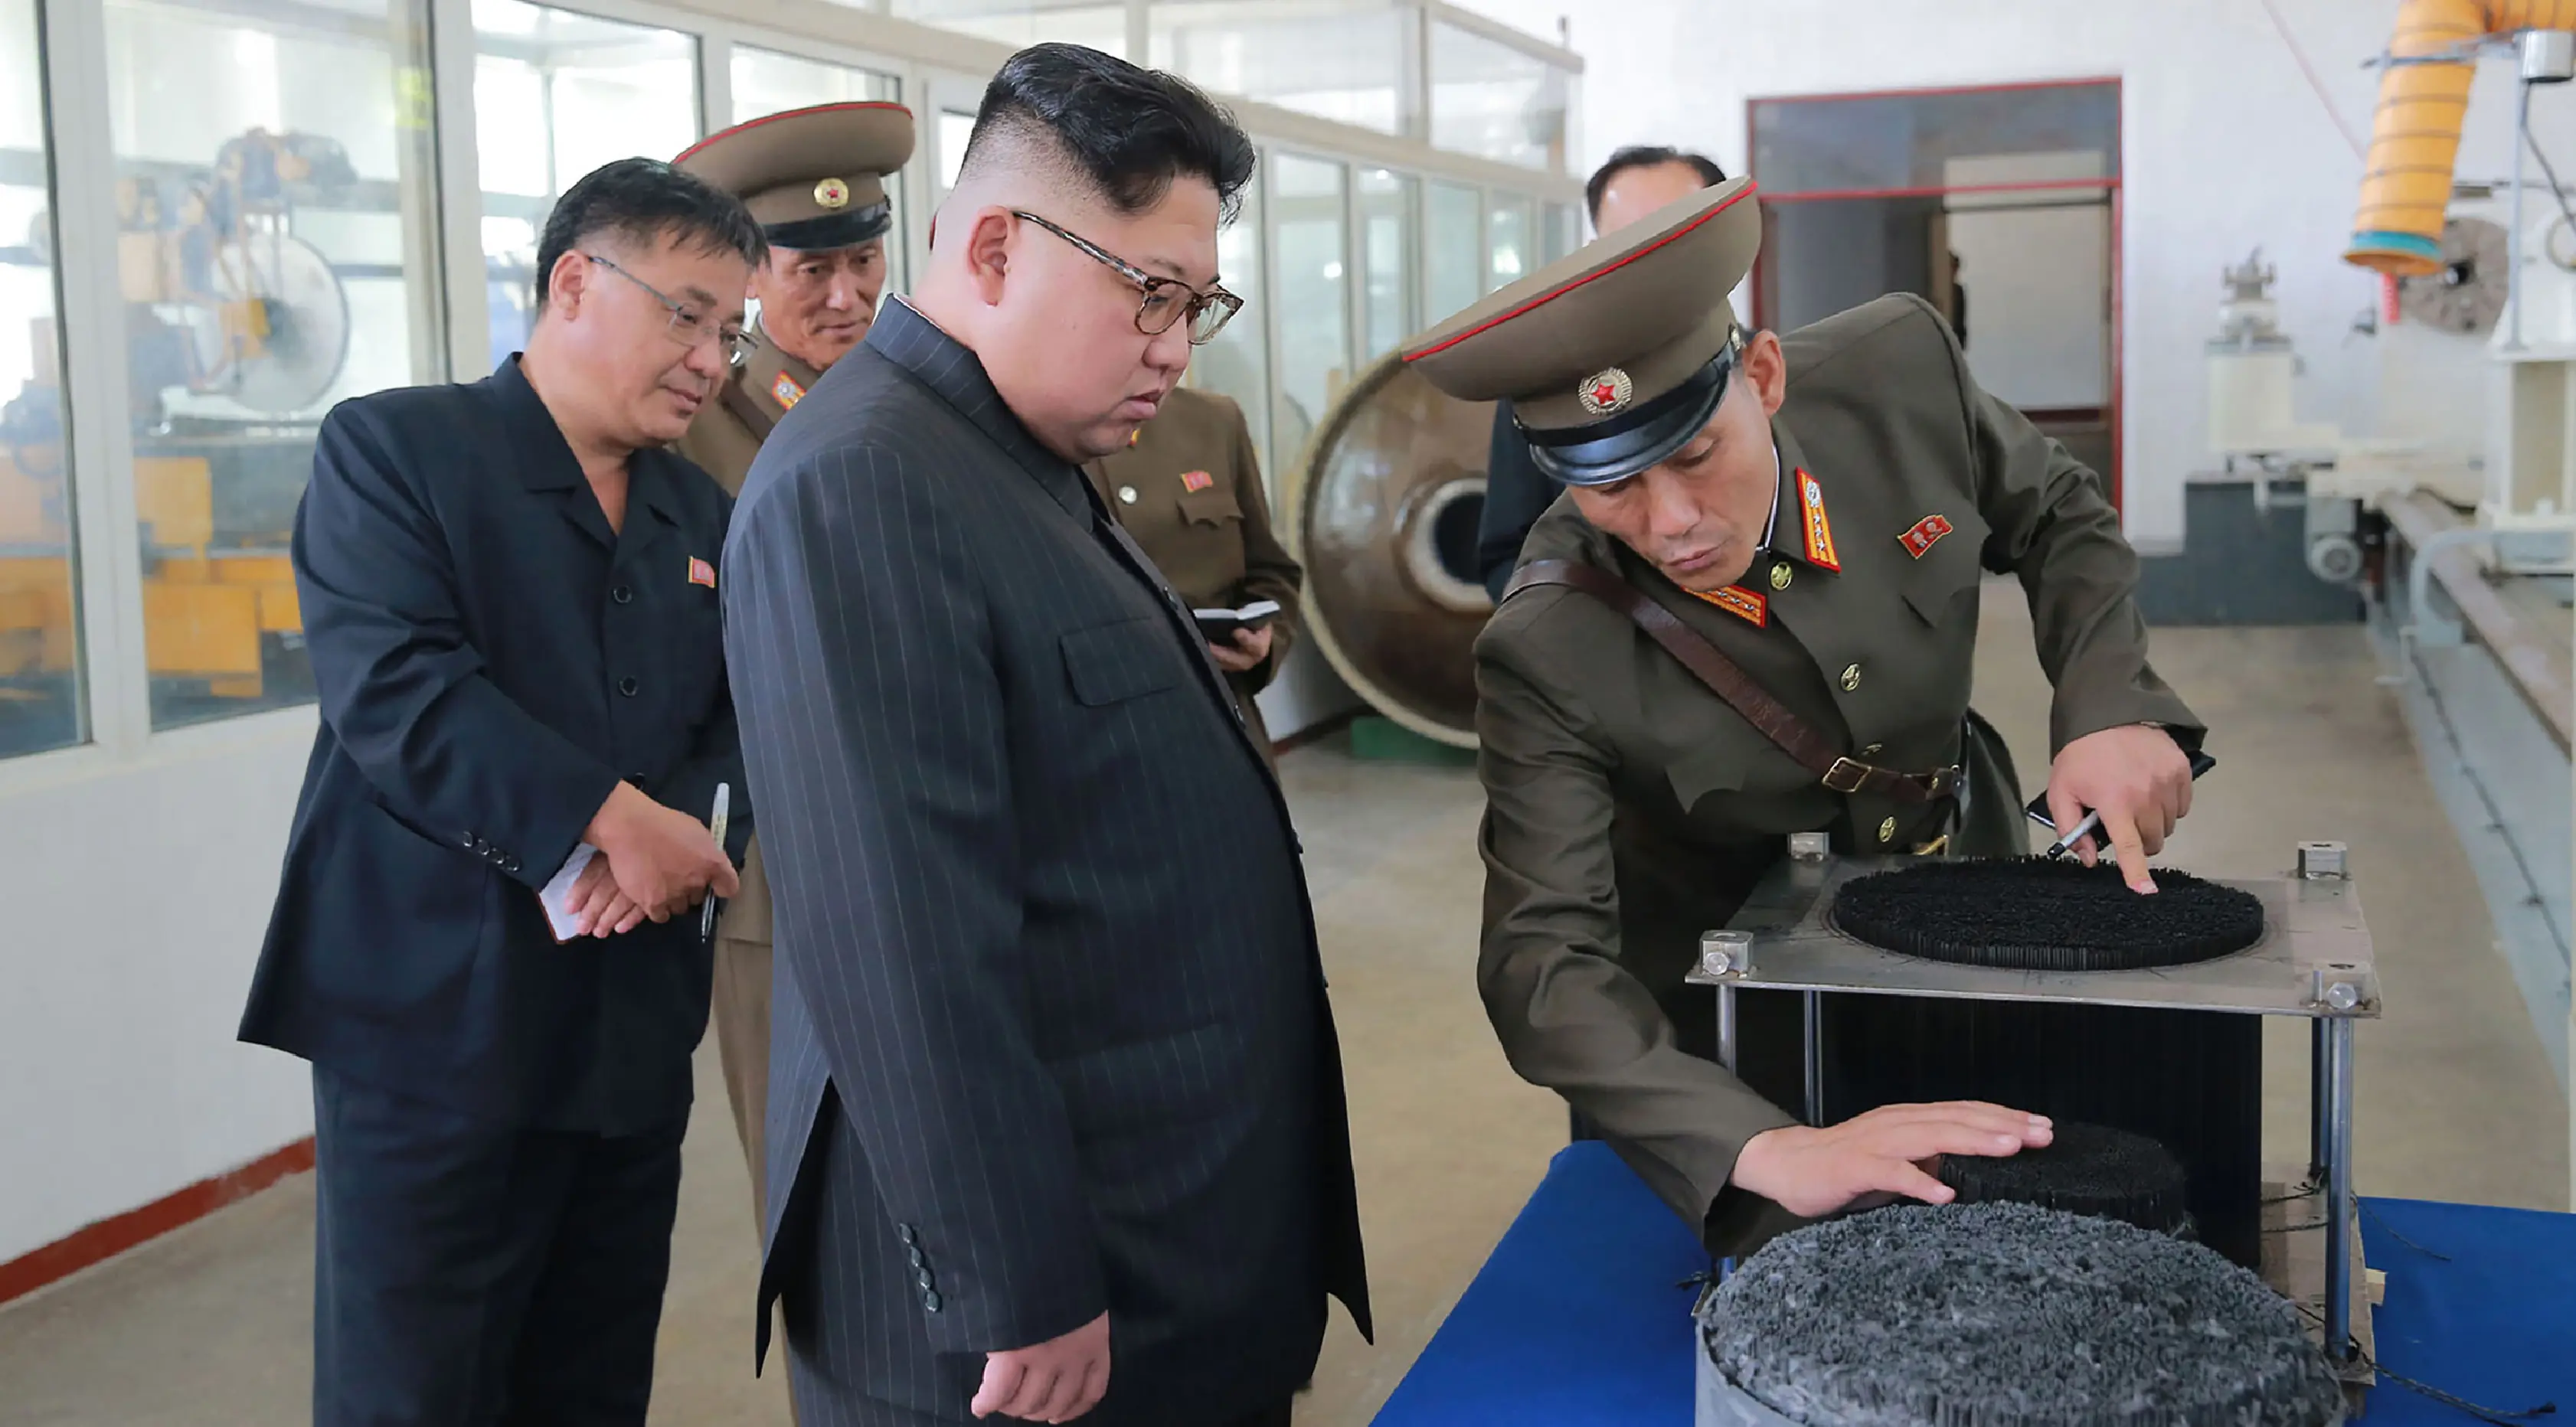  Pemimpin Korea Utara, Kim Jong-Un melihat material kimia di Akademi Ilmu Pertahanan pada tanggal 23 Agustus 2017. Dalam kunjungannya Kim Jong-un ditunjukkan tentang proses pembuatan ujung kepala rudal balistik antara benua. (AFP Photo/Kcna Via Kns/Str)